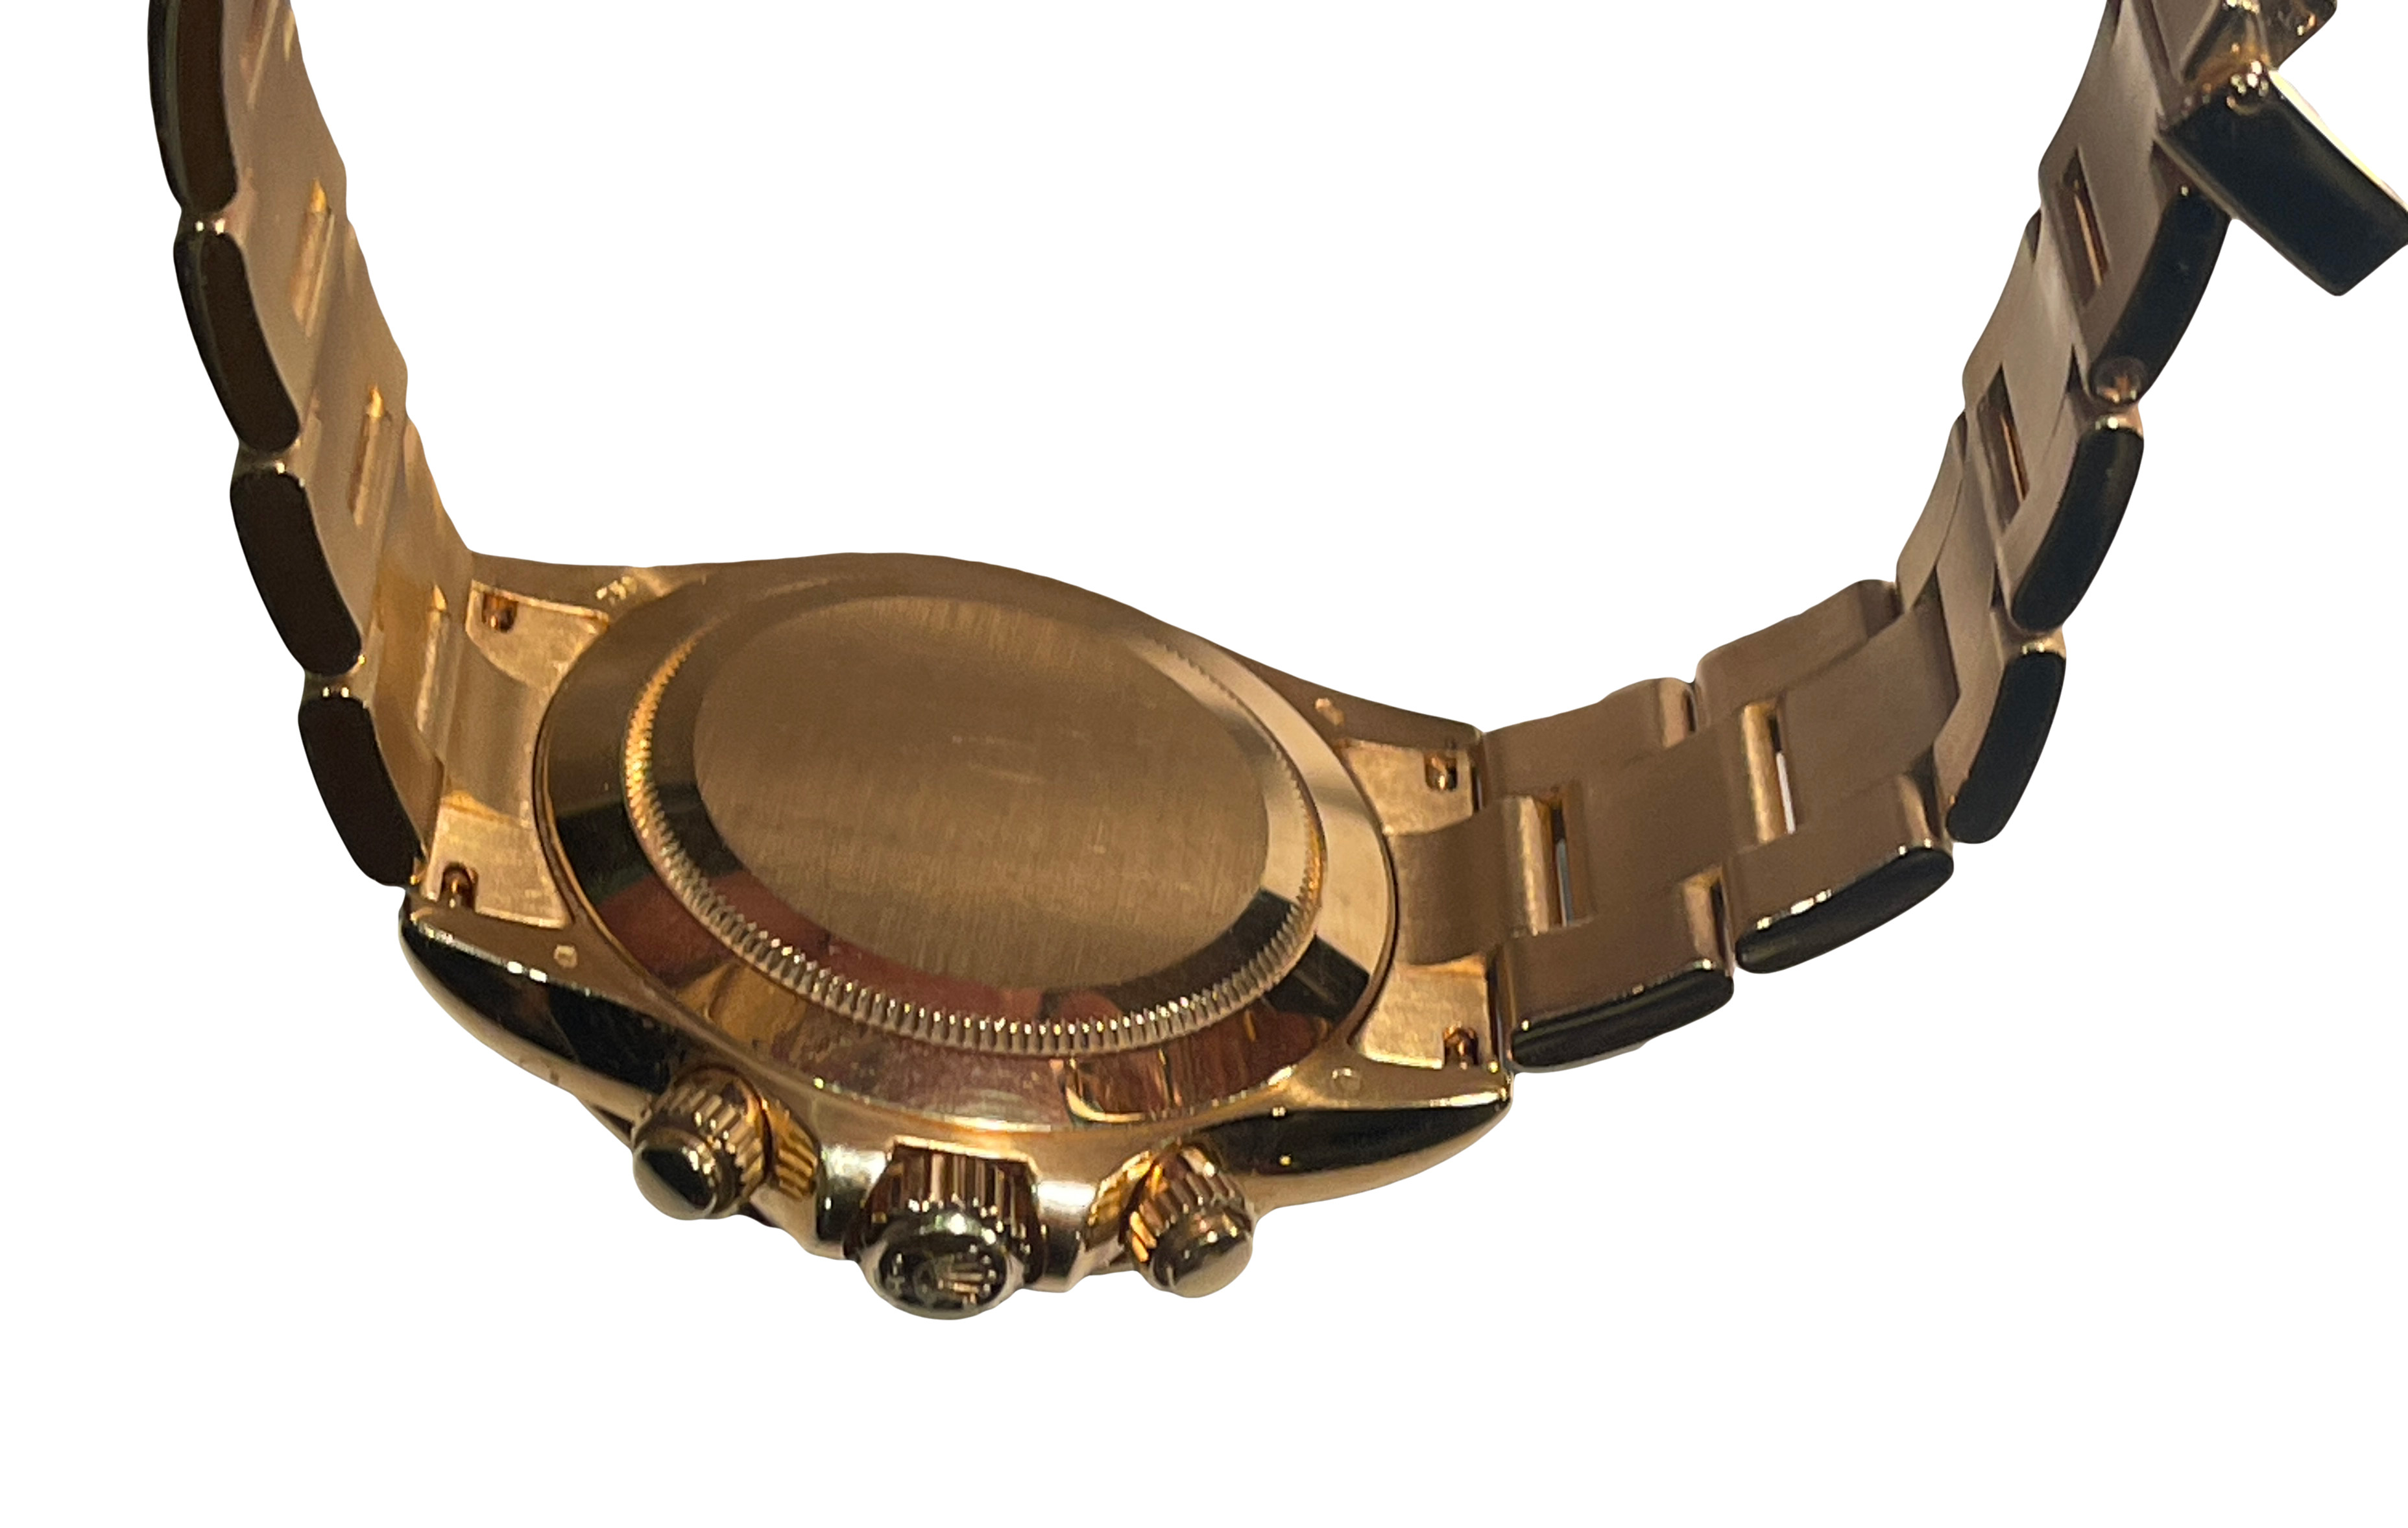 Rolex, Year 2010, #116528 40mm, Movement AUTOMATIC Chronograph, Model: Daytona Yellow Gold, Black - Image 3 of 5